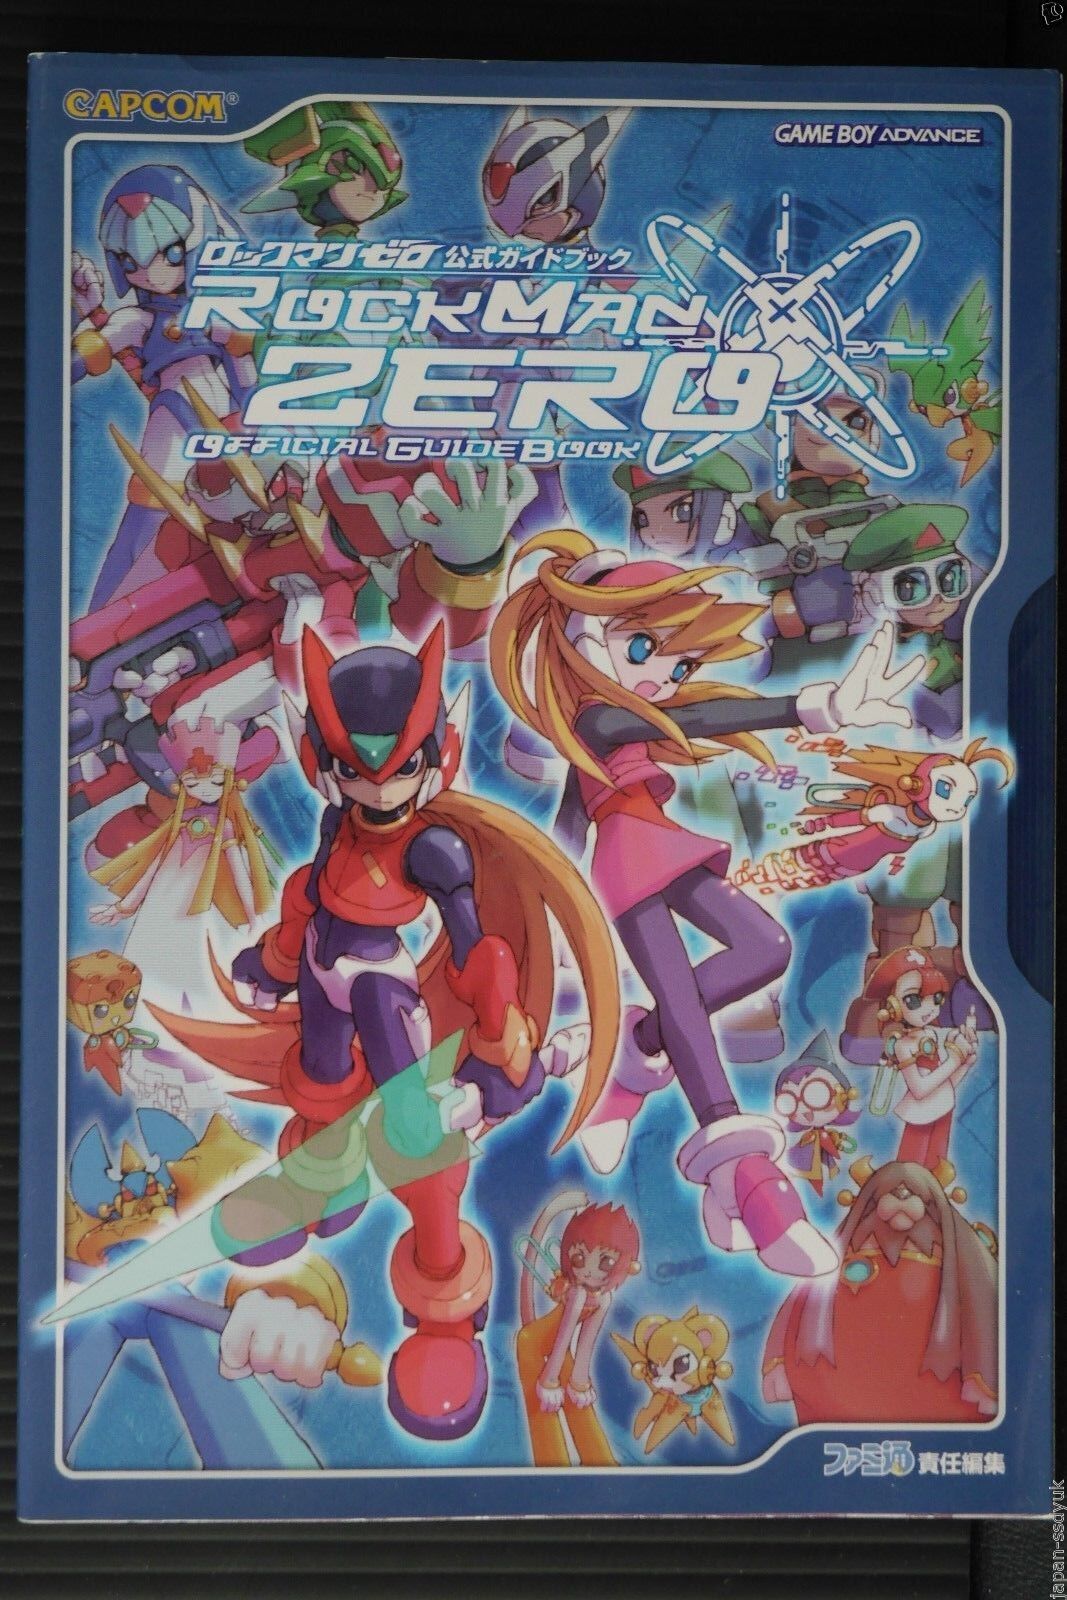 JAPAN Mega Man Zero / Rockman Zero Official Guide Book